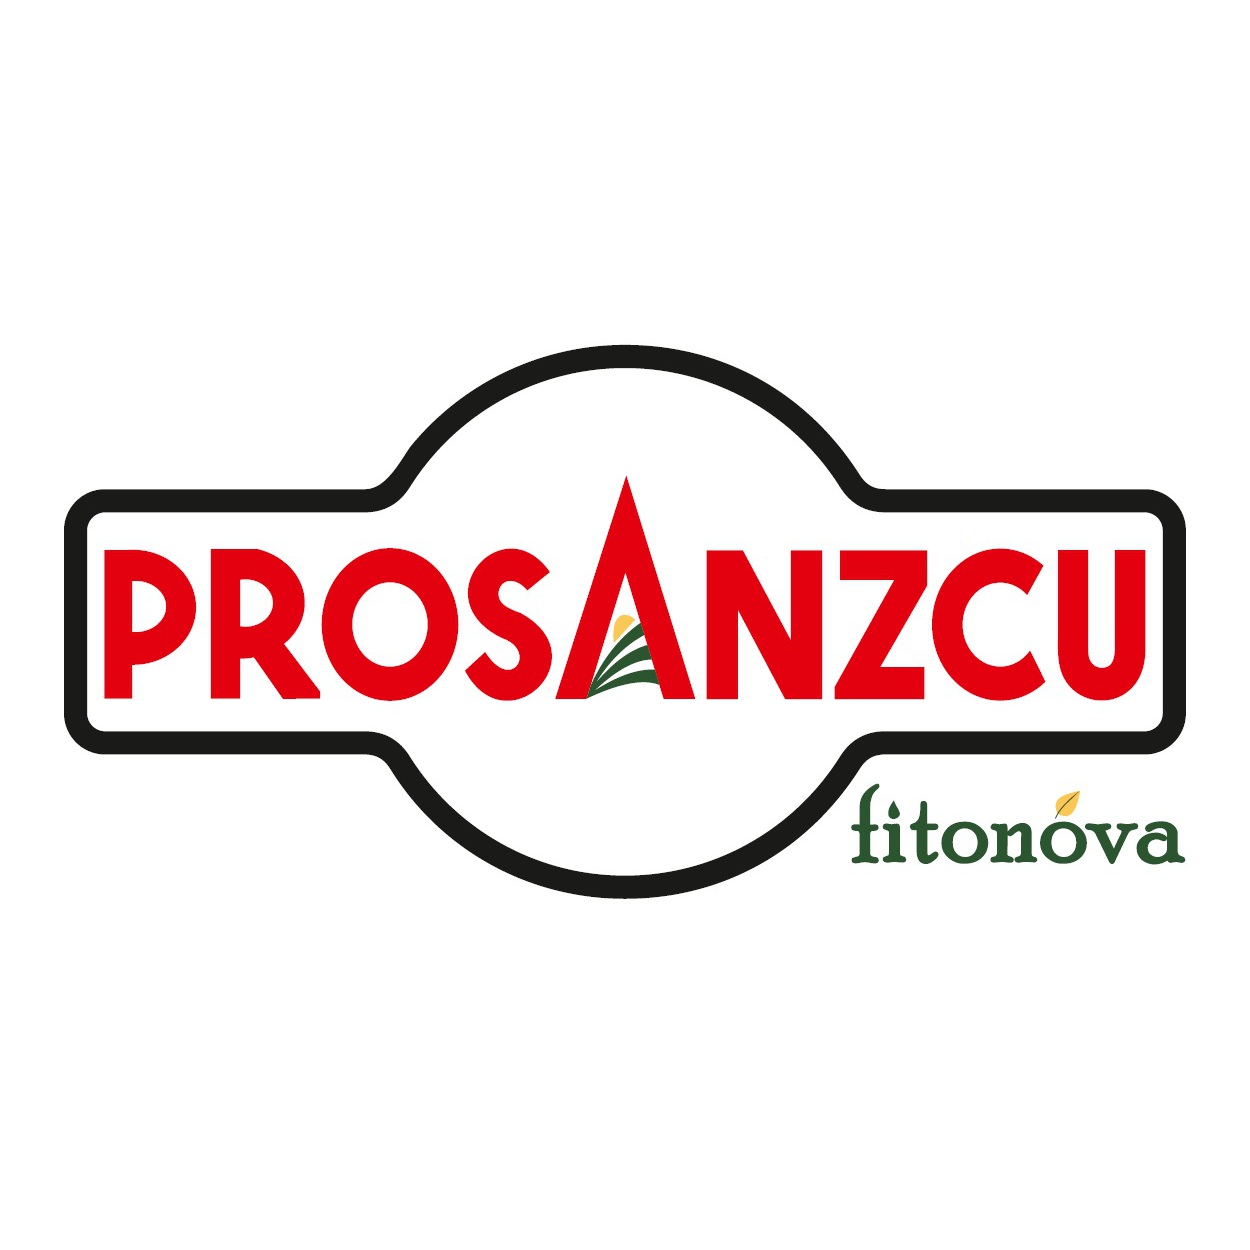 PROSANZCU, S.A. Fuentepelayo